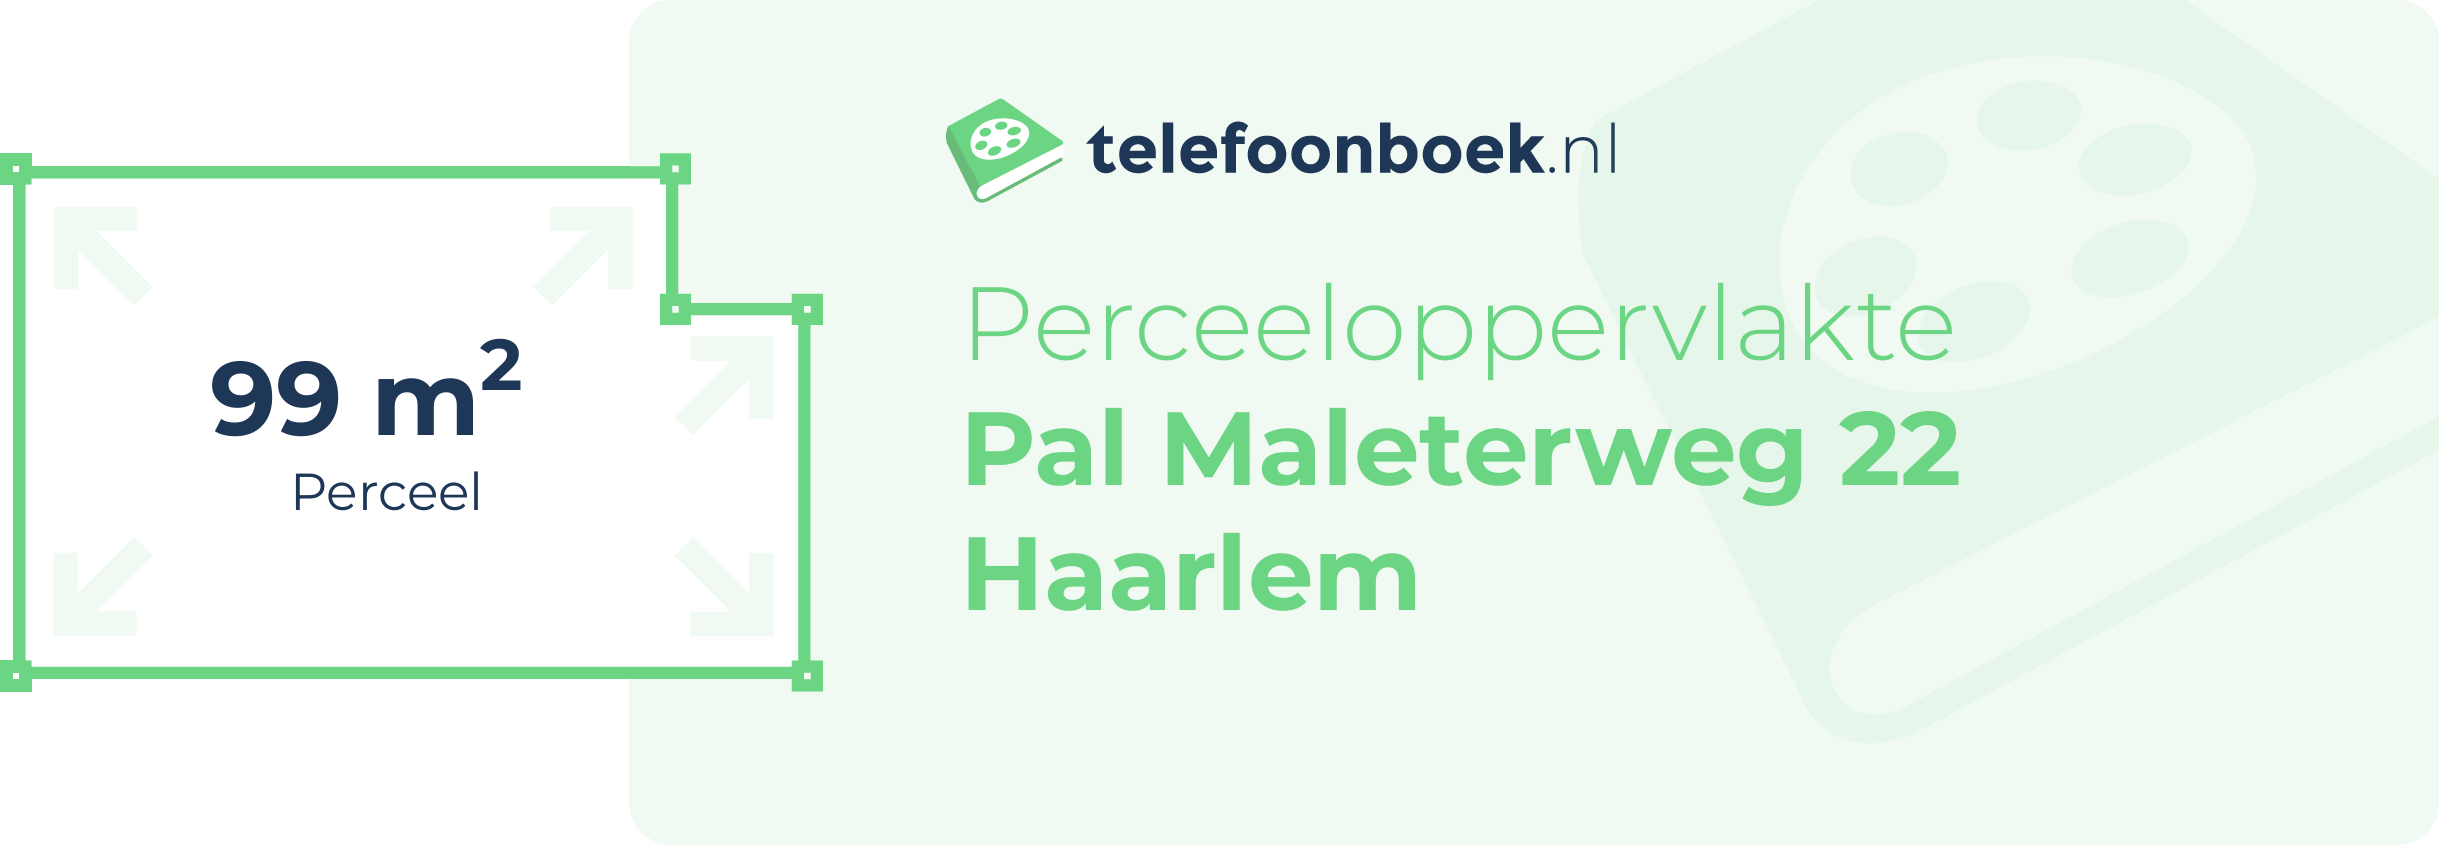 Perceeloppervlakte Pal Maleterweg 22 Haarlem